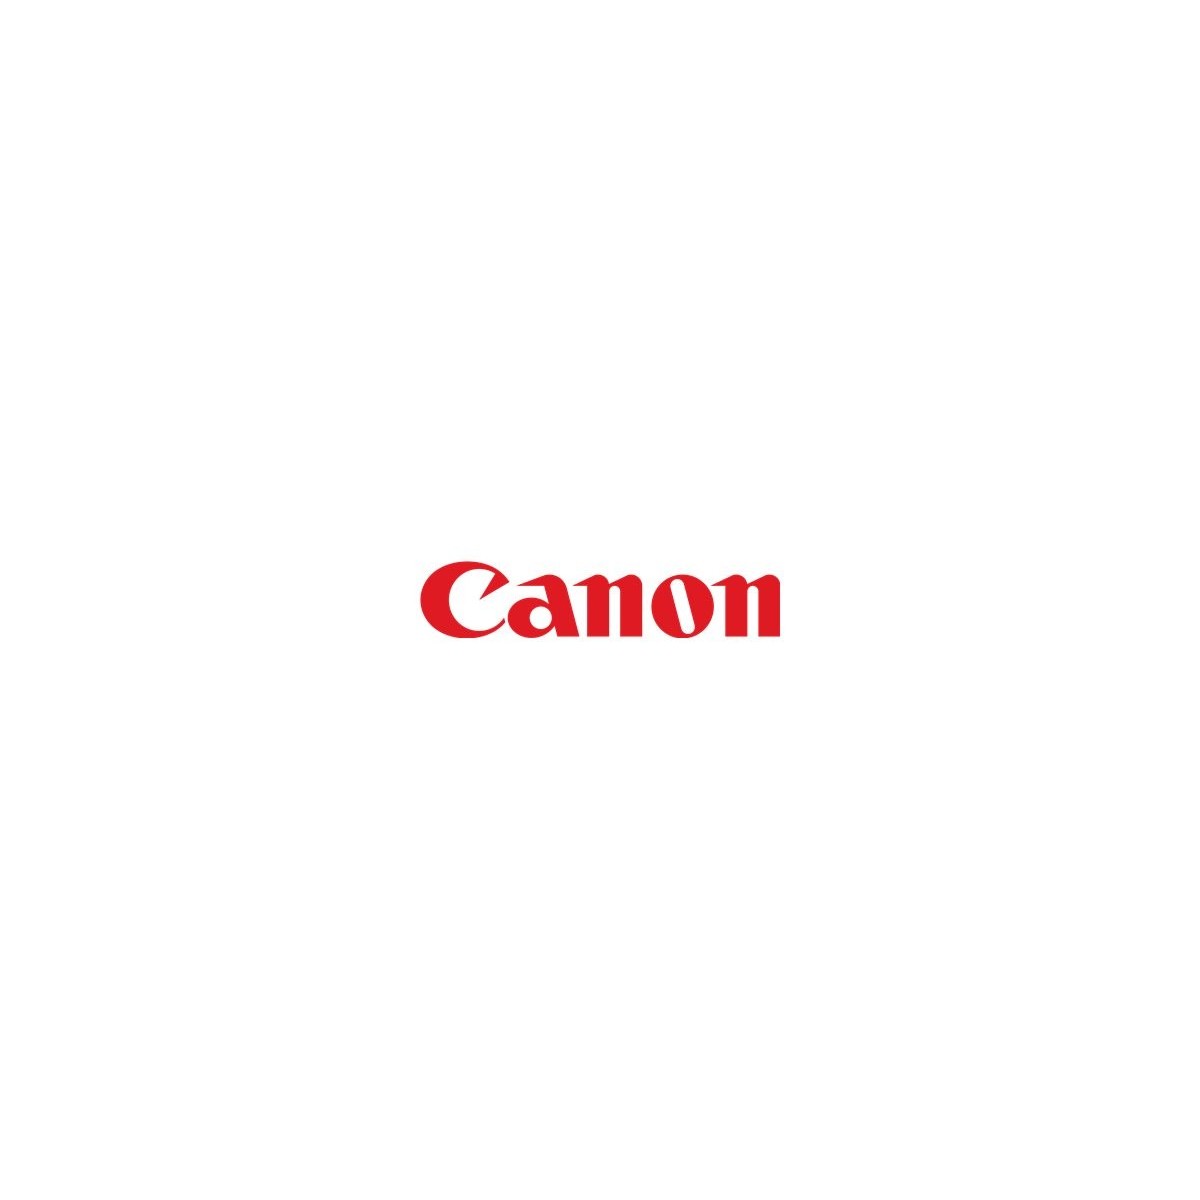 Canon Posterjet 7.5 Production Edit.